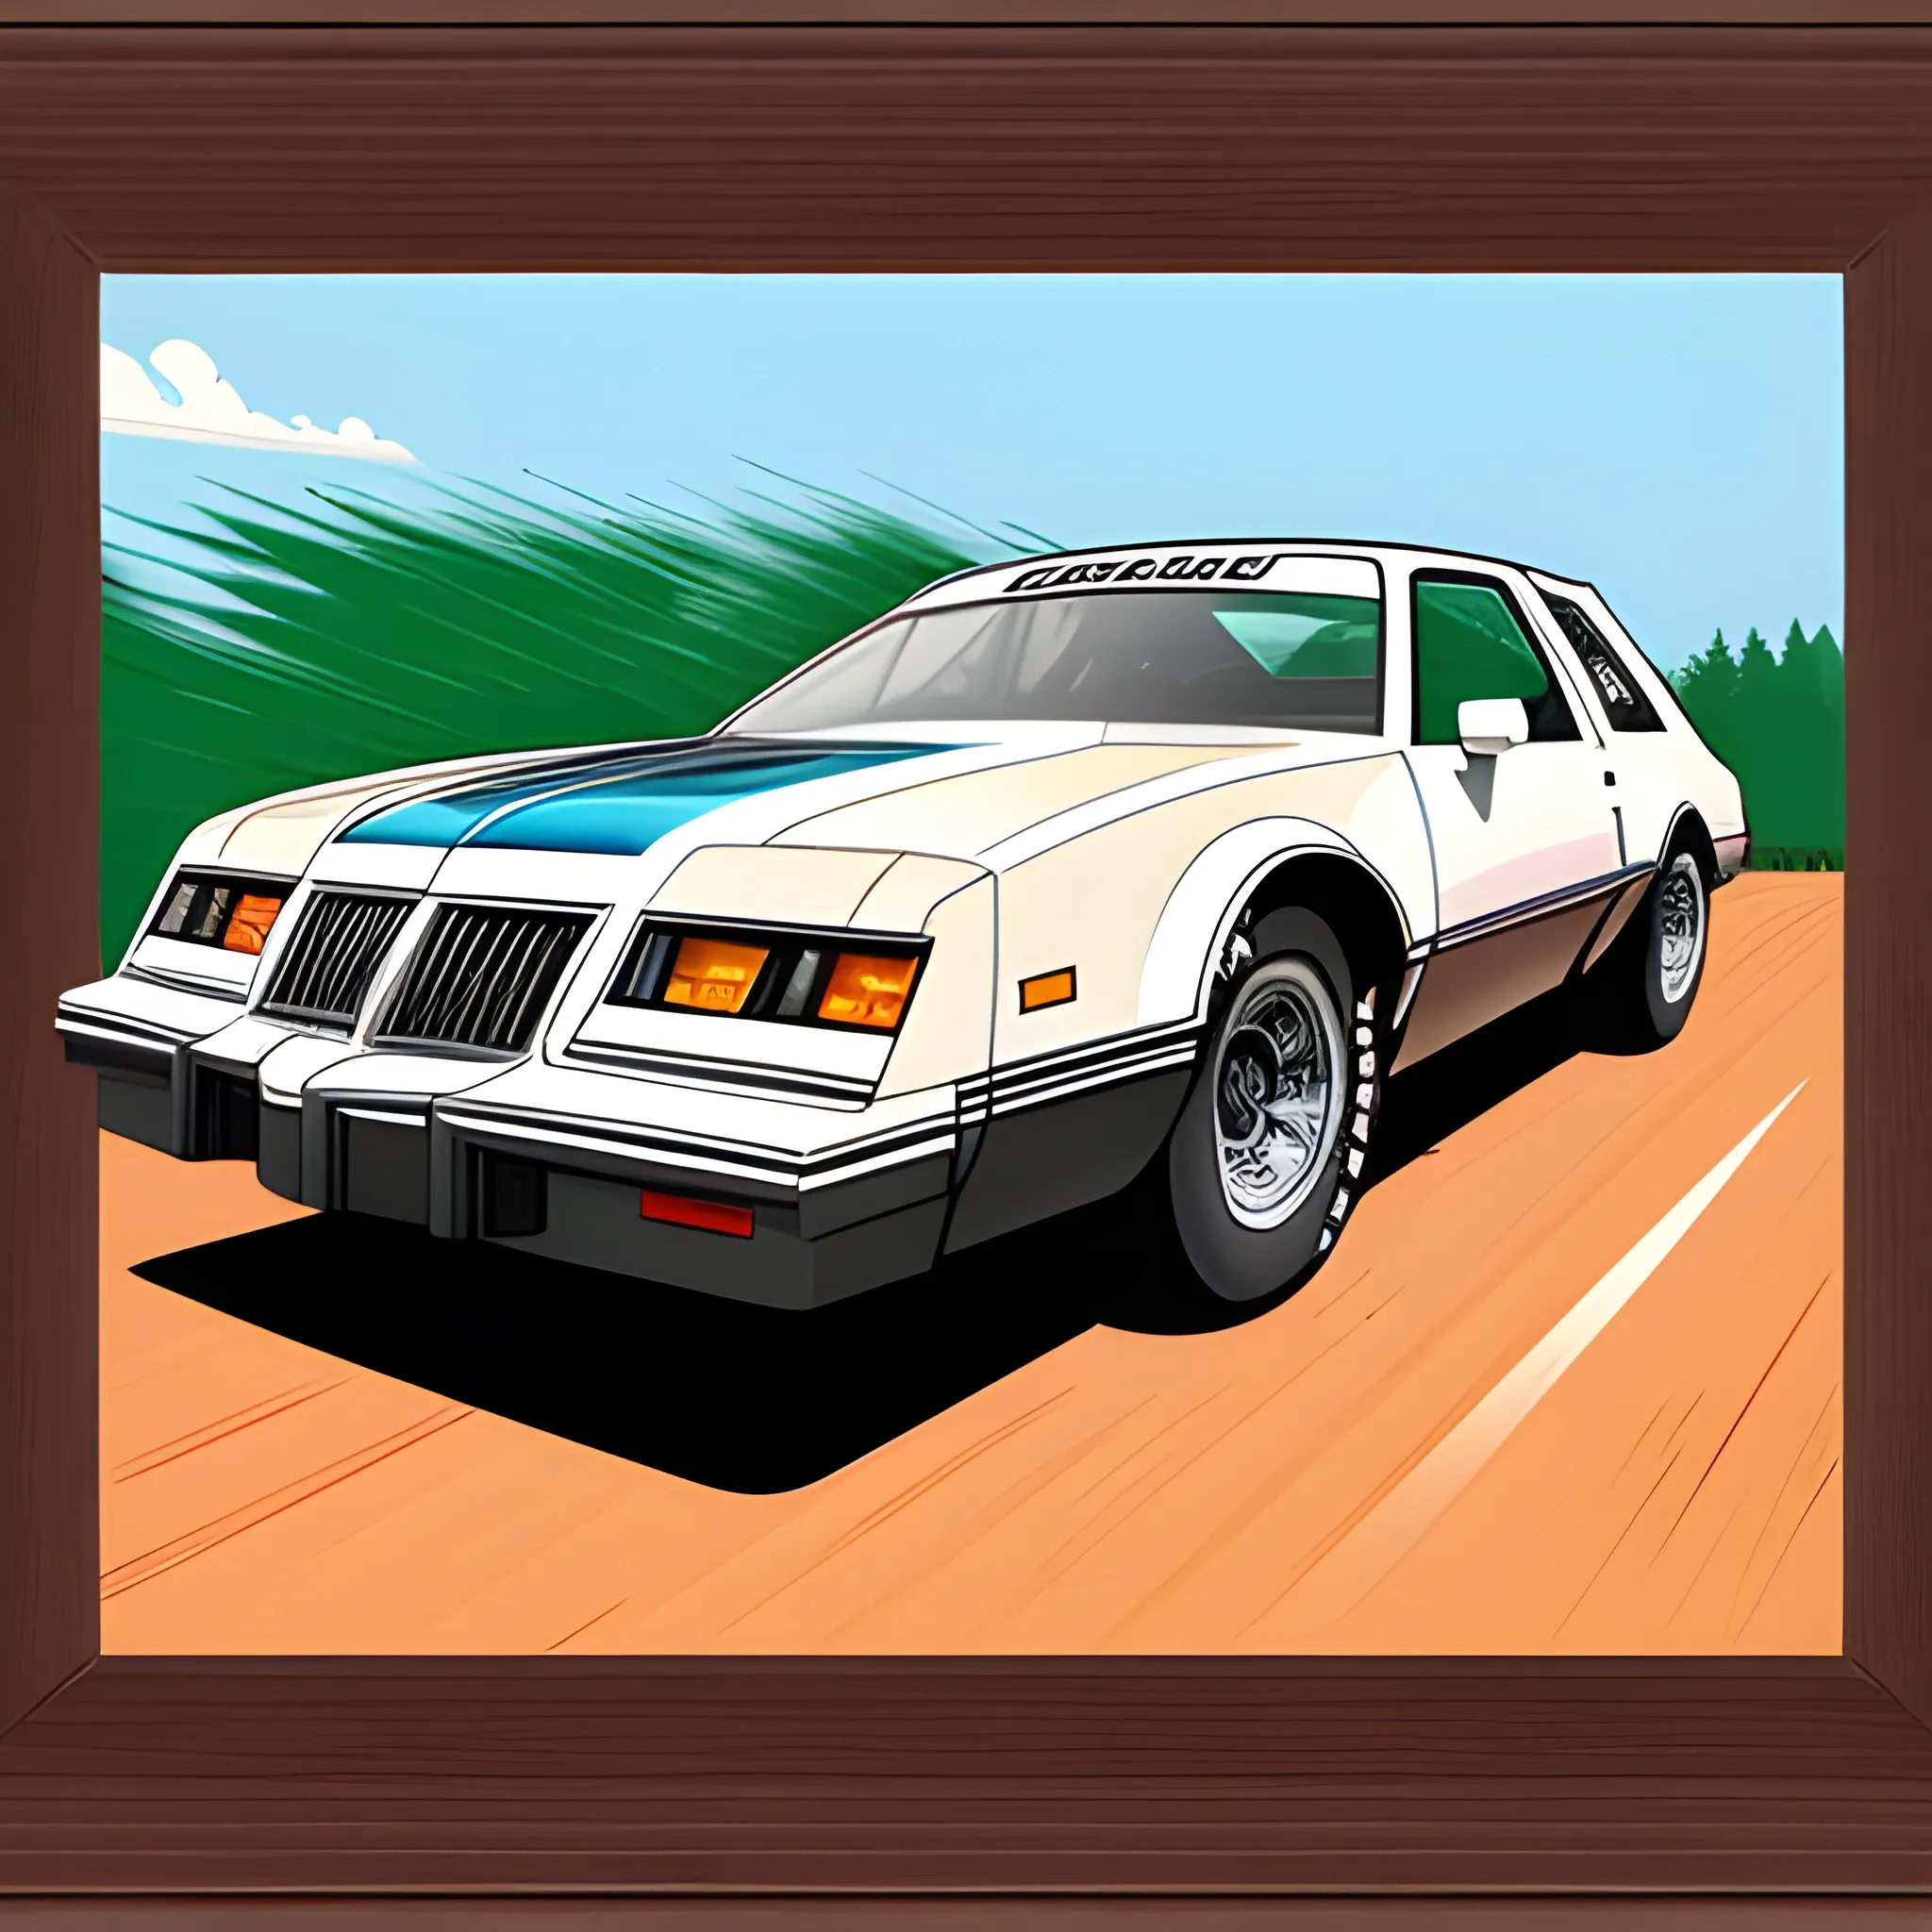 1980s Buick race car illustration  in frame